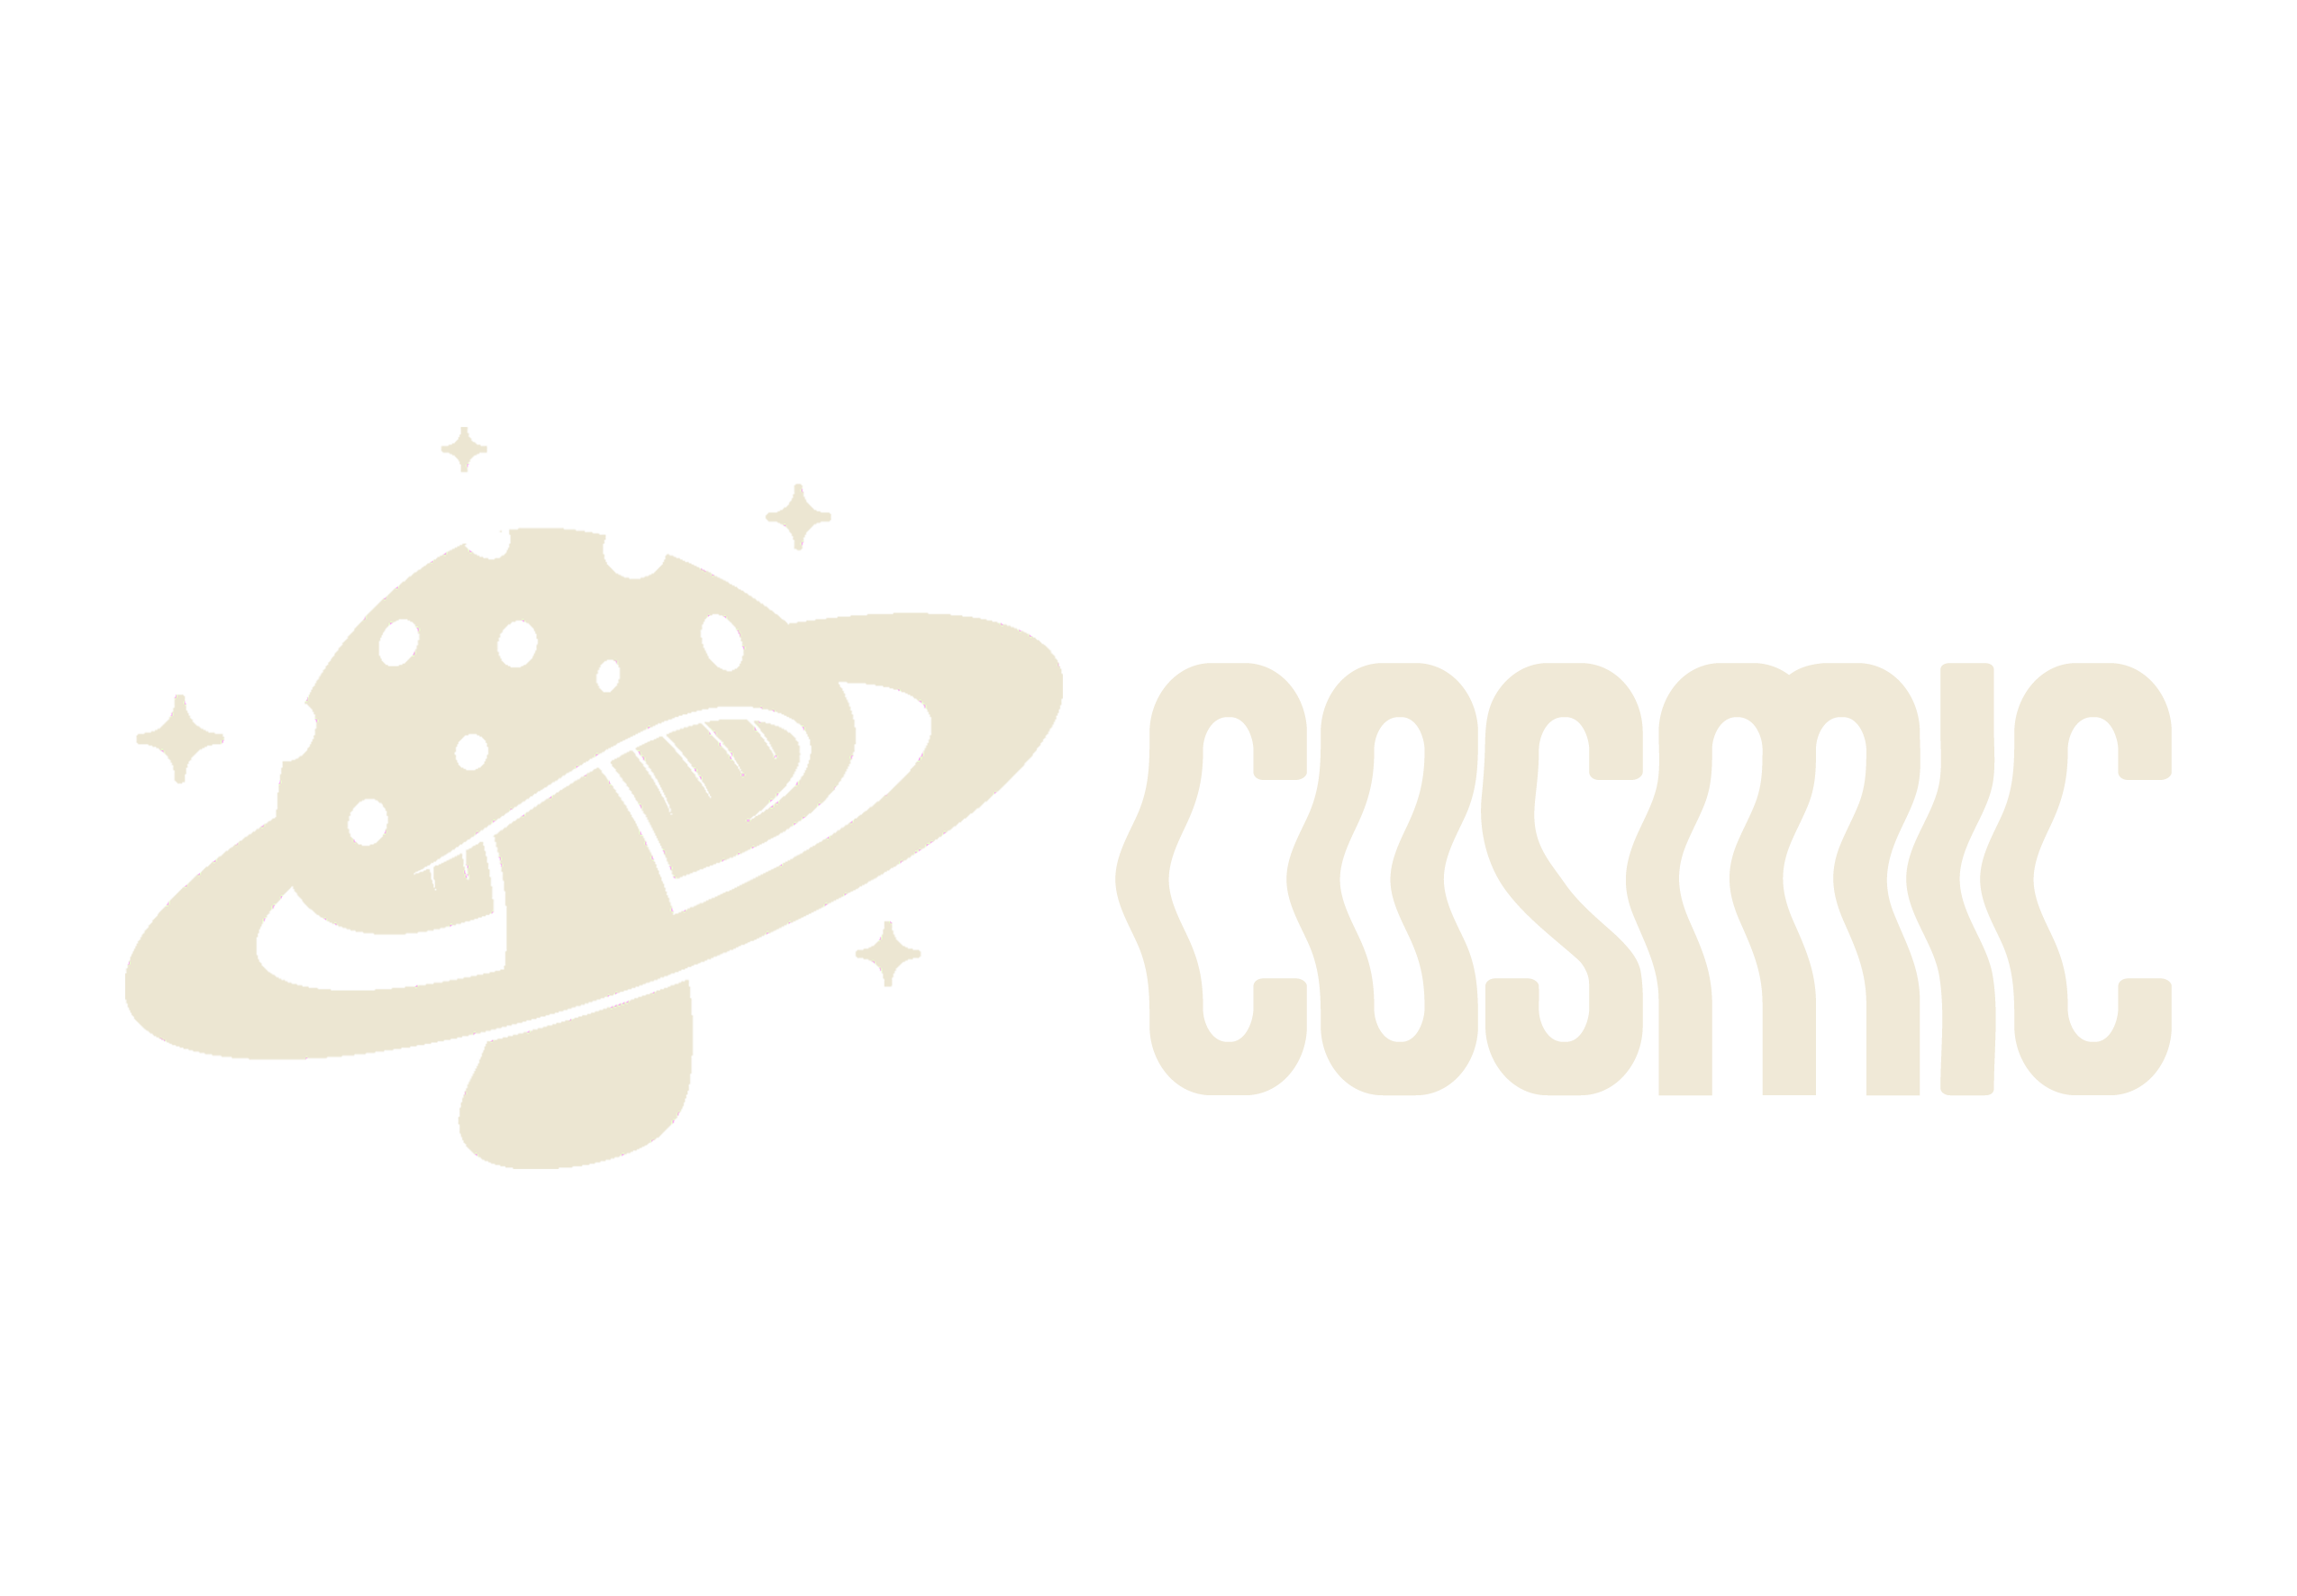 Cosmic Mushrooms